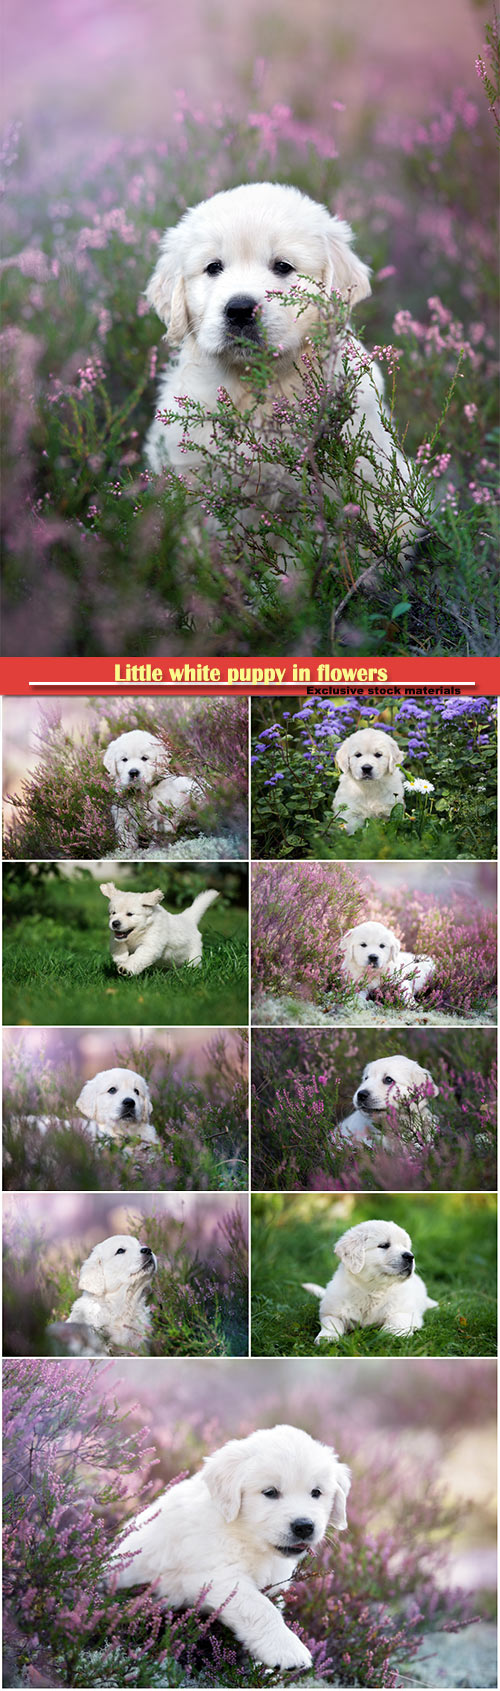 Little white puppy in flowers